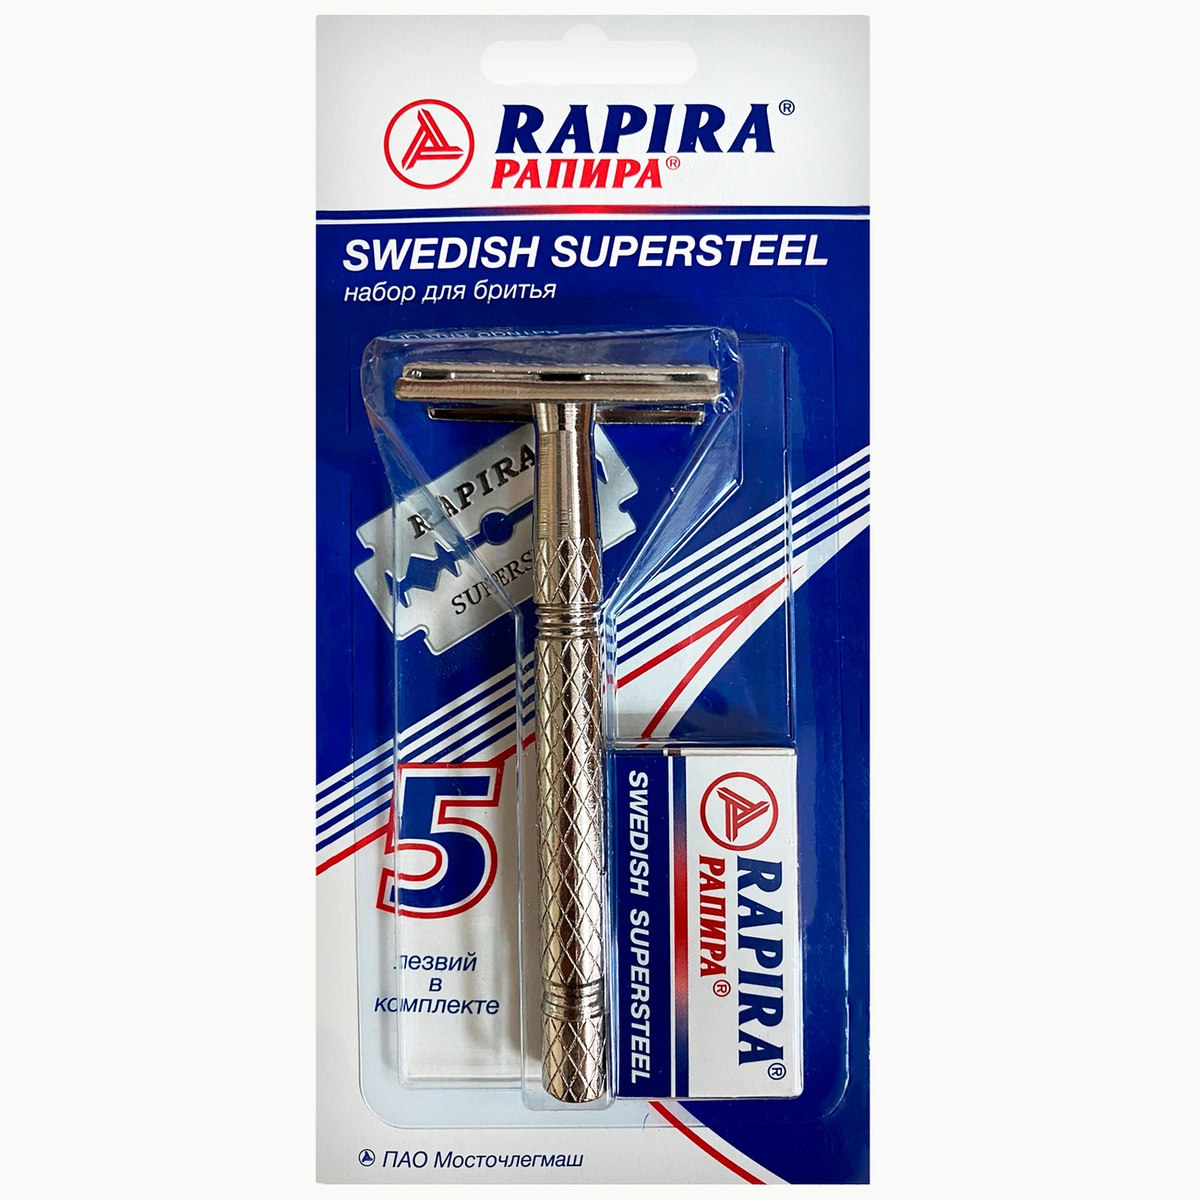 Станок д/б Rapira Super Steel +5 лезвий (Ф*), код: у9144